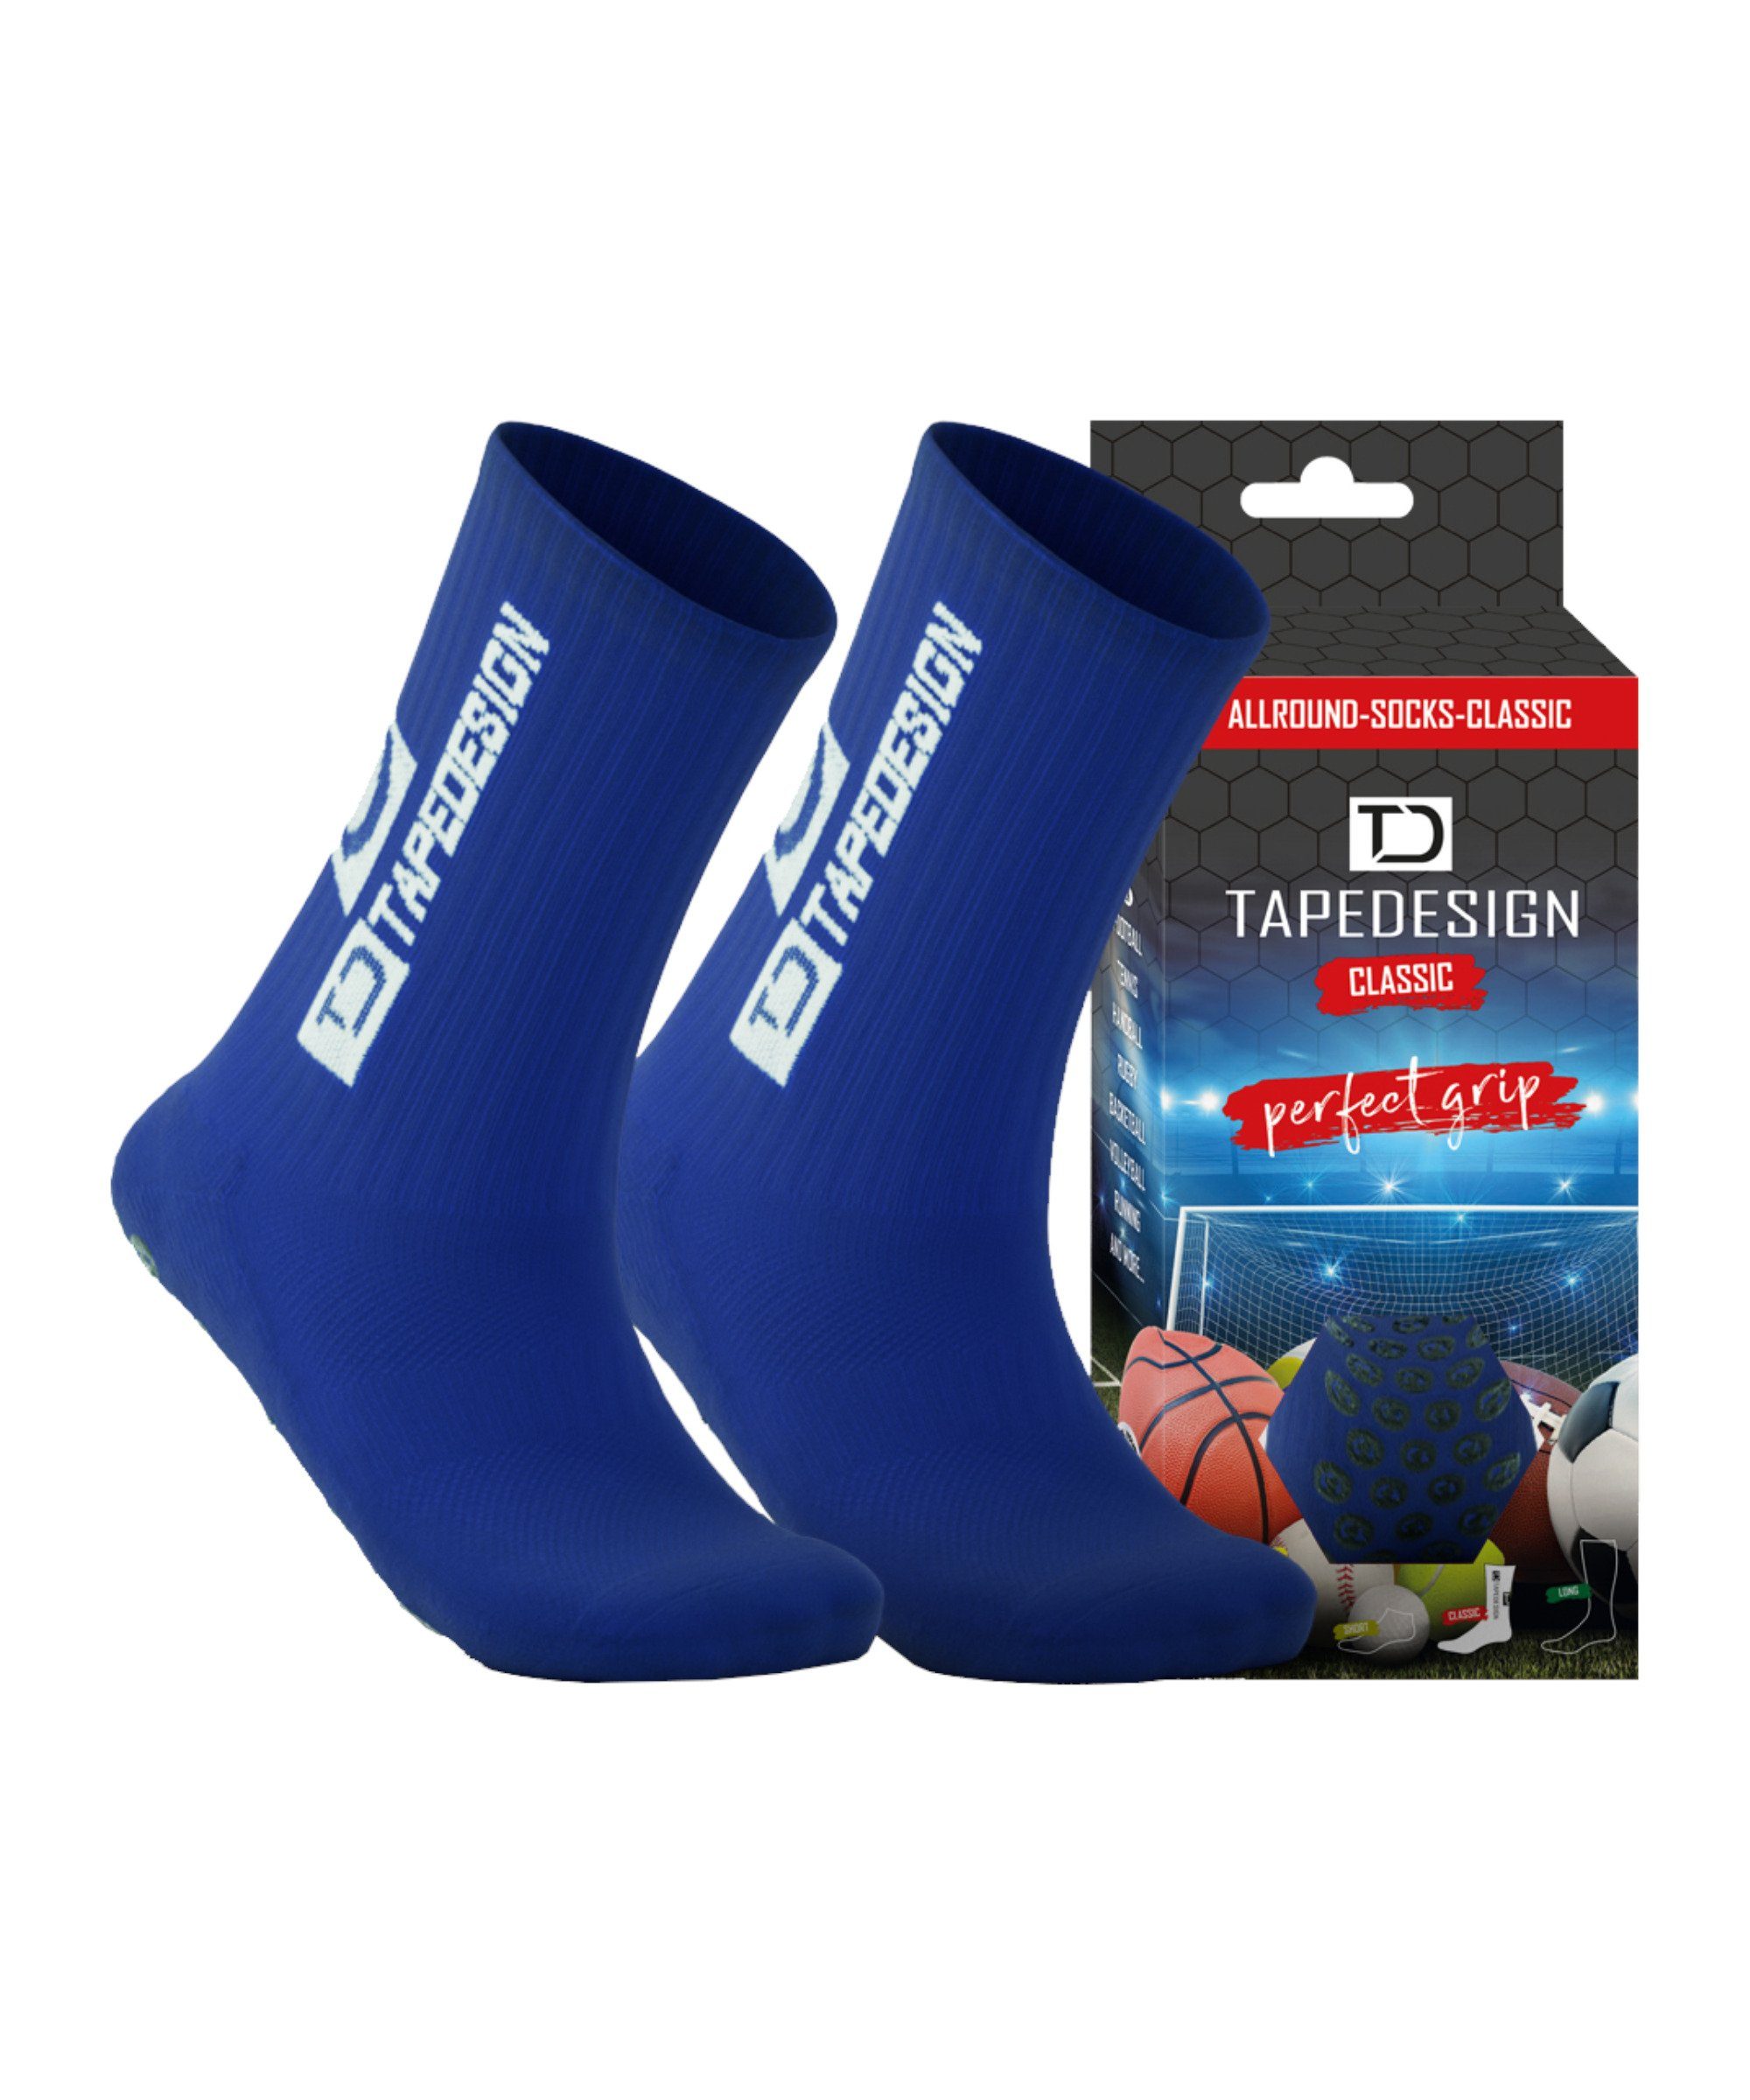 Socken default Gripsocks Sportsocken Tapedesign blauweiss